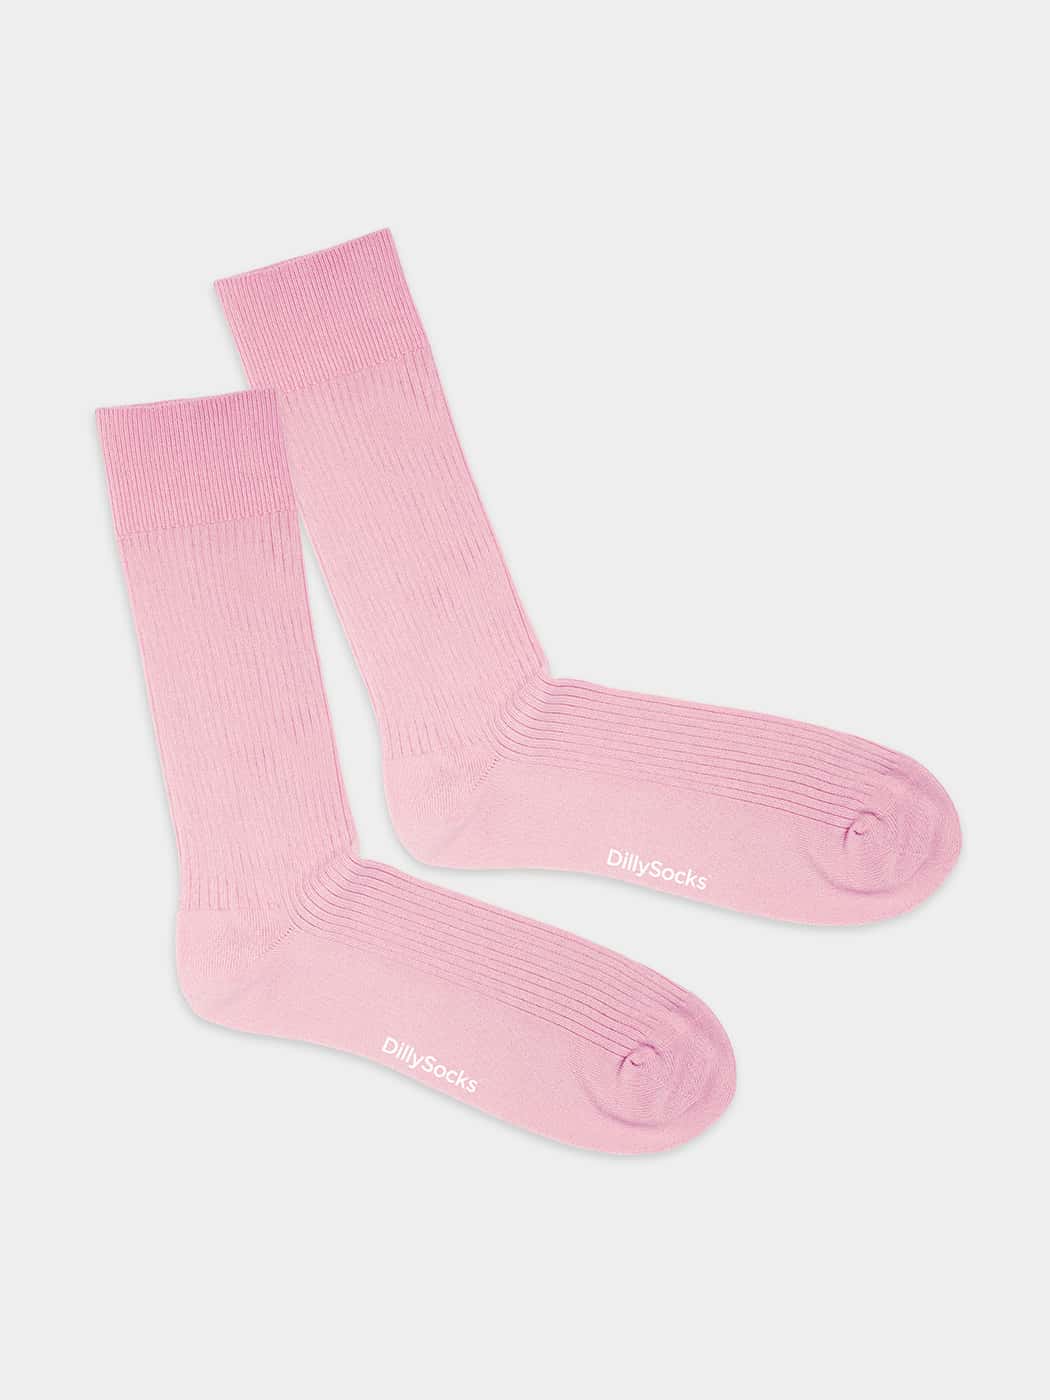 - Socken in Rosa mit Uni Motiv/Muster von DillySocks